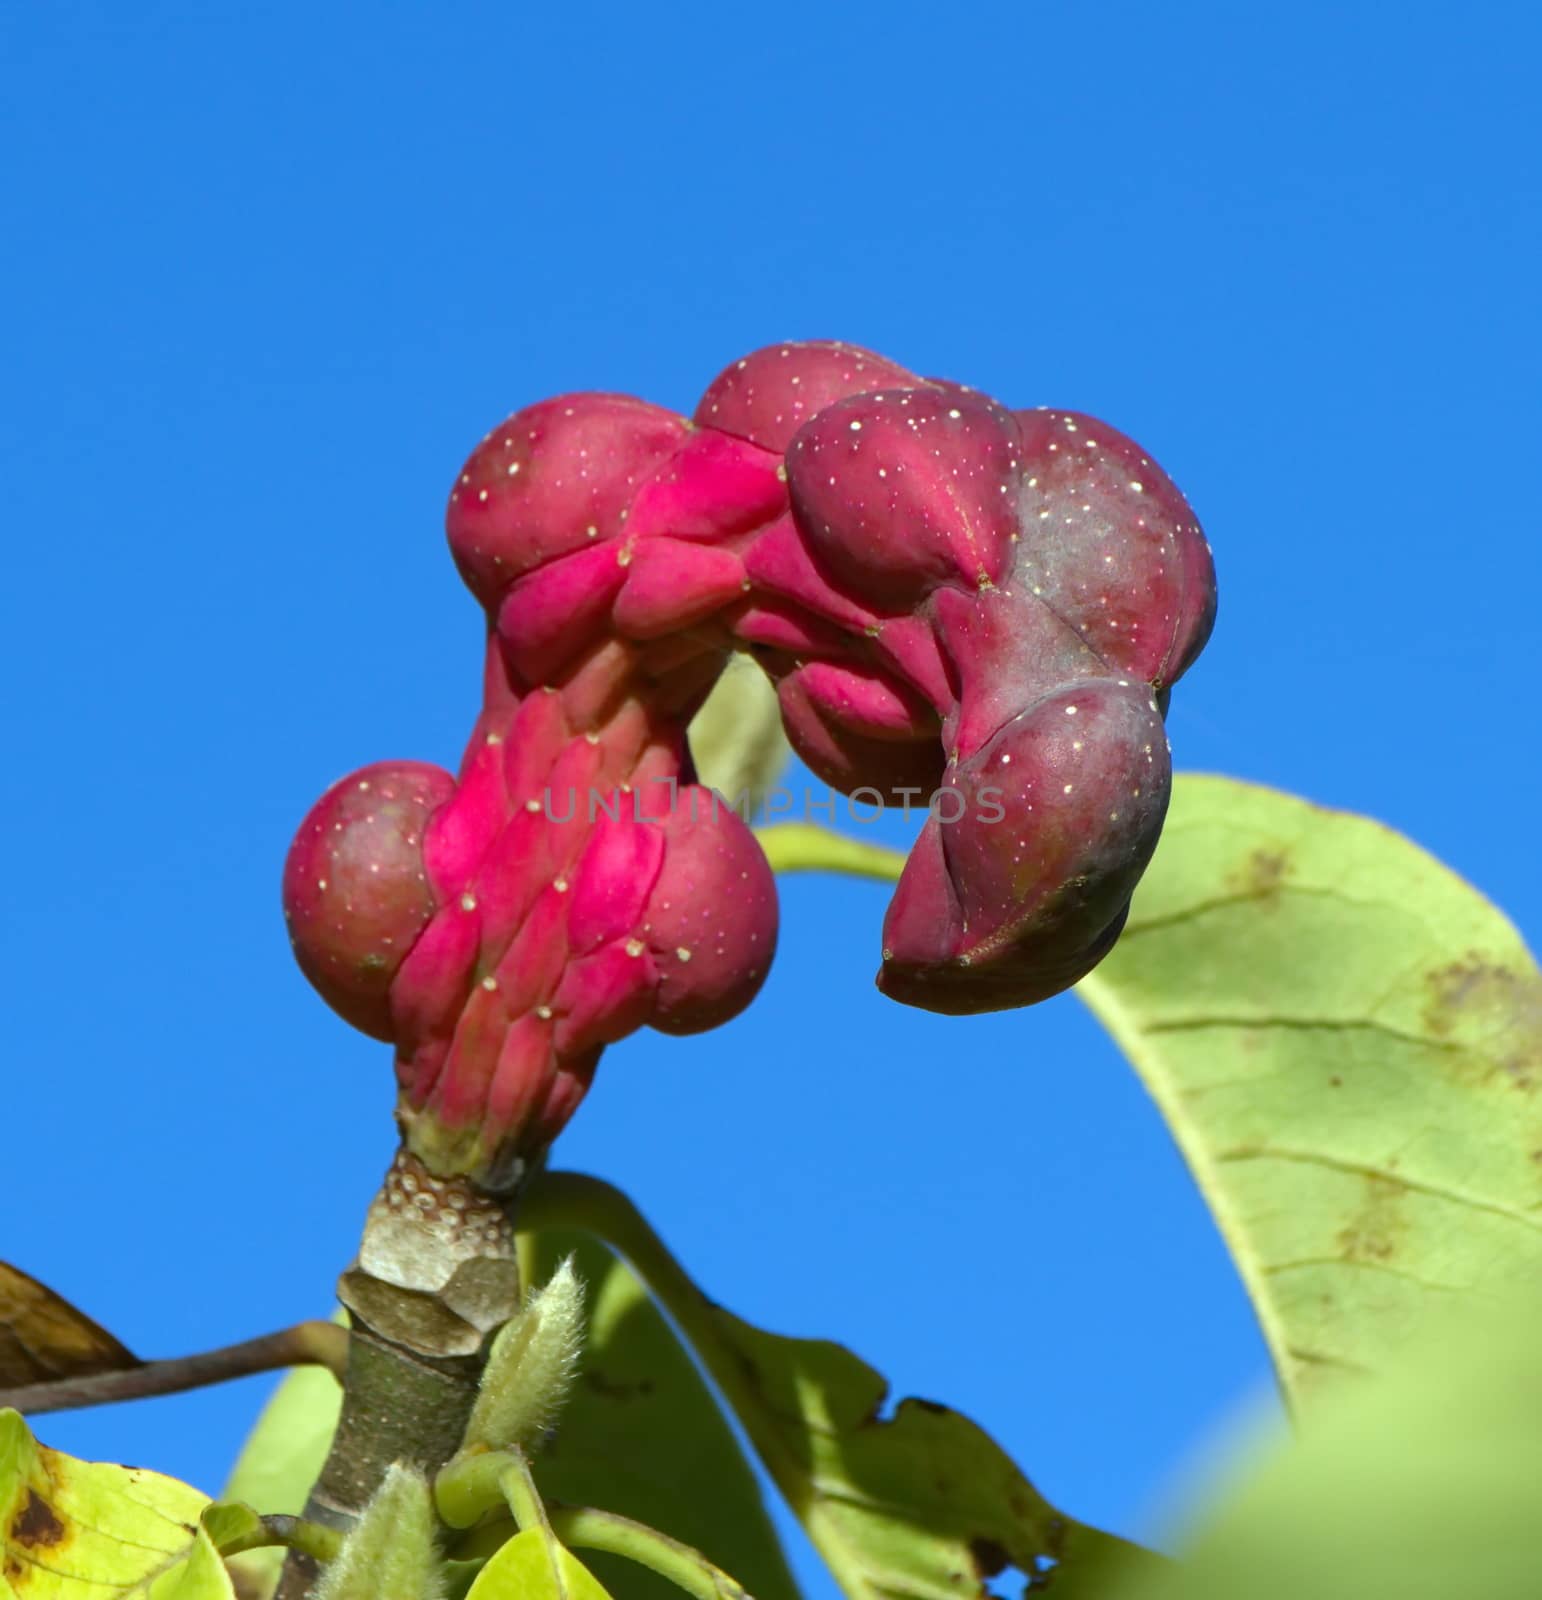 Magnolia Sayonara seed pods by Elenaphotos21